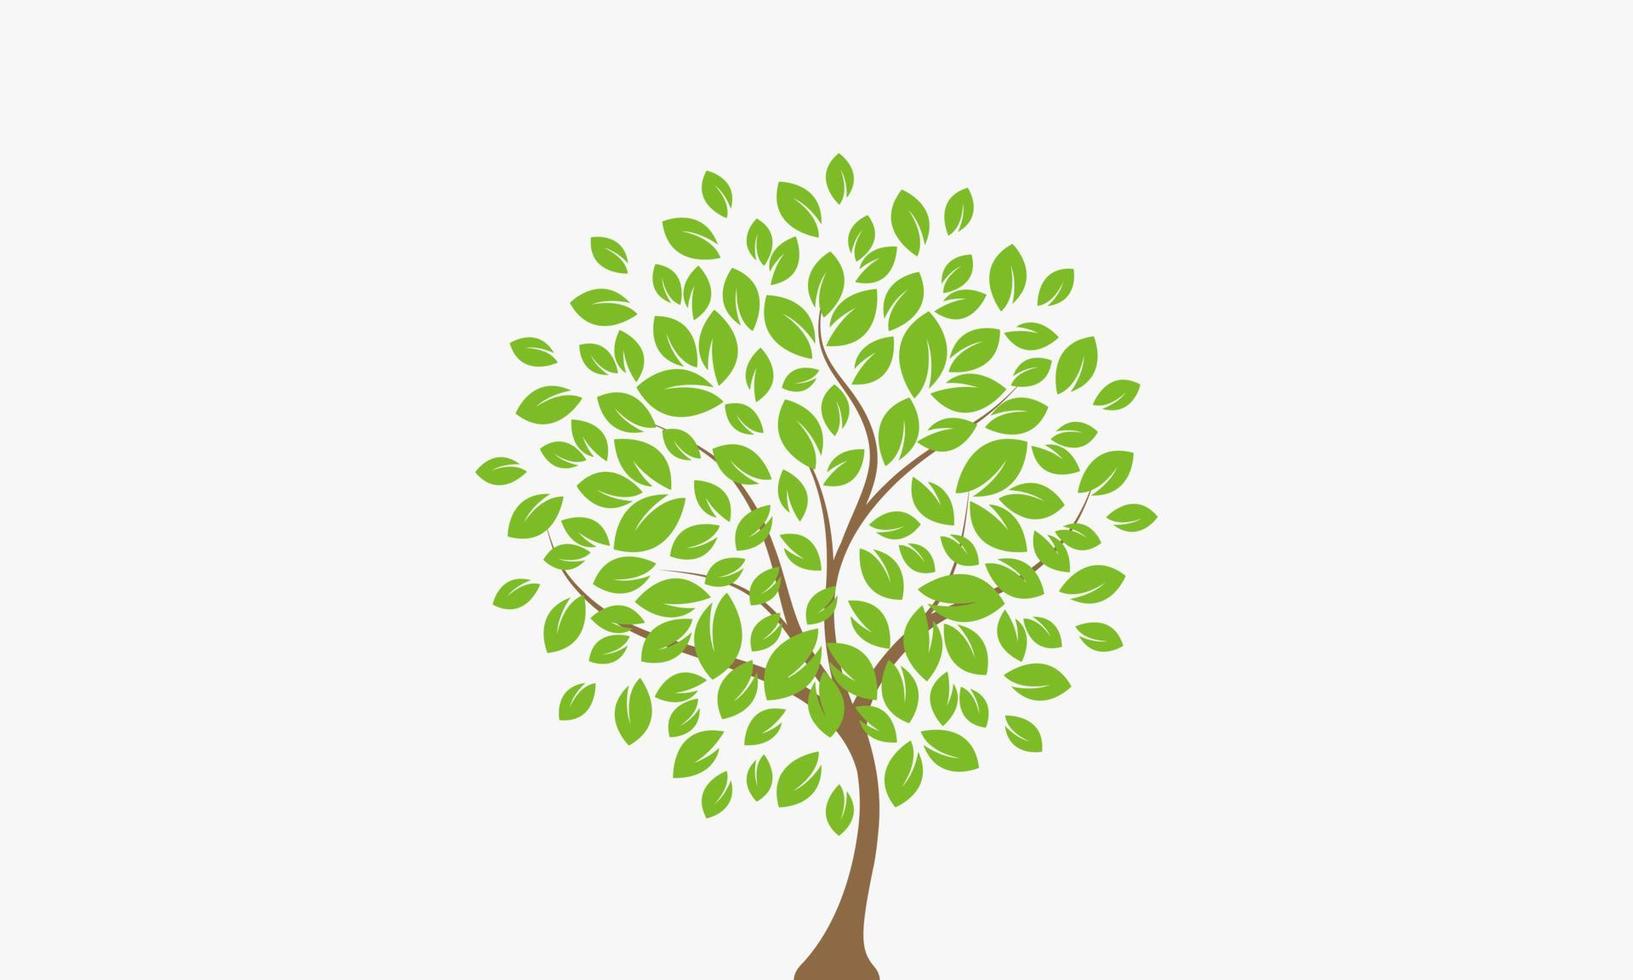 green tree on white background. vector illustration.